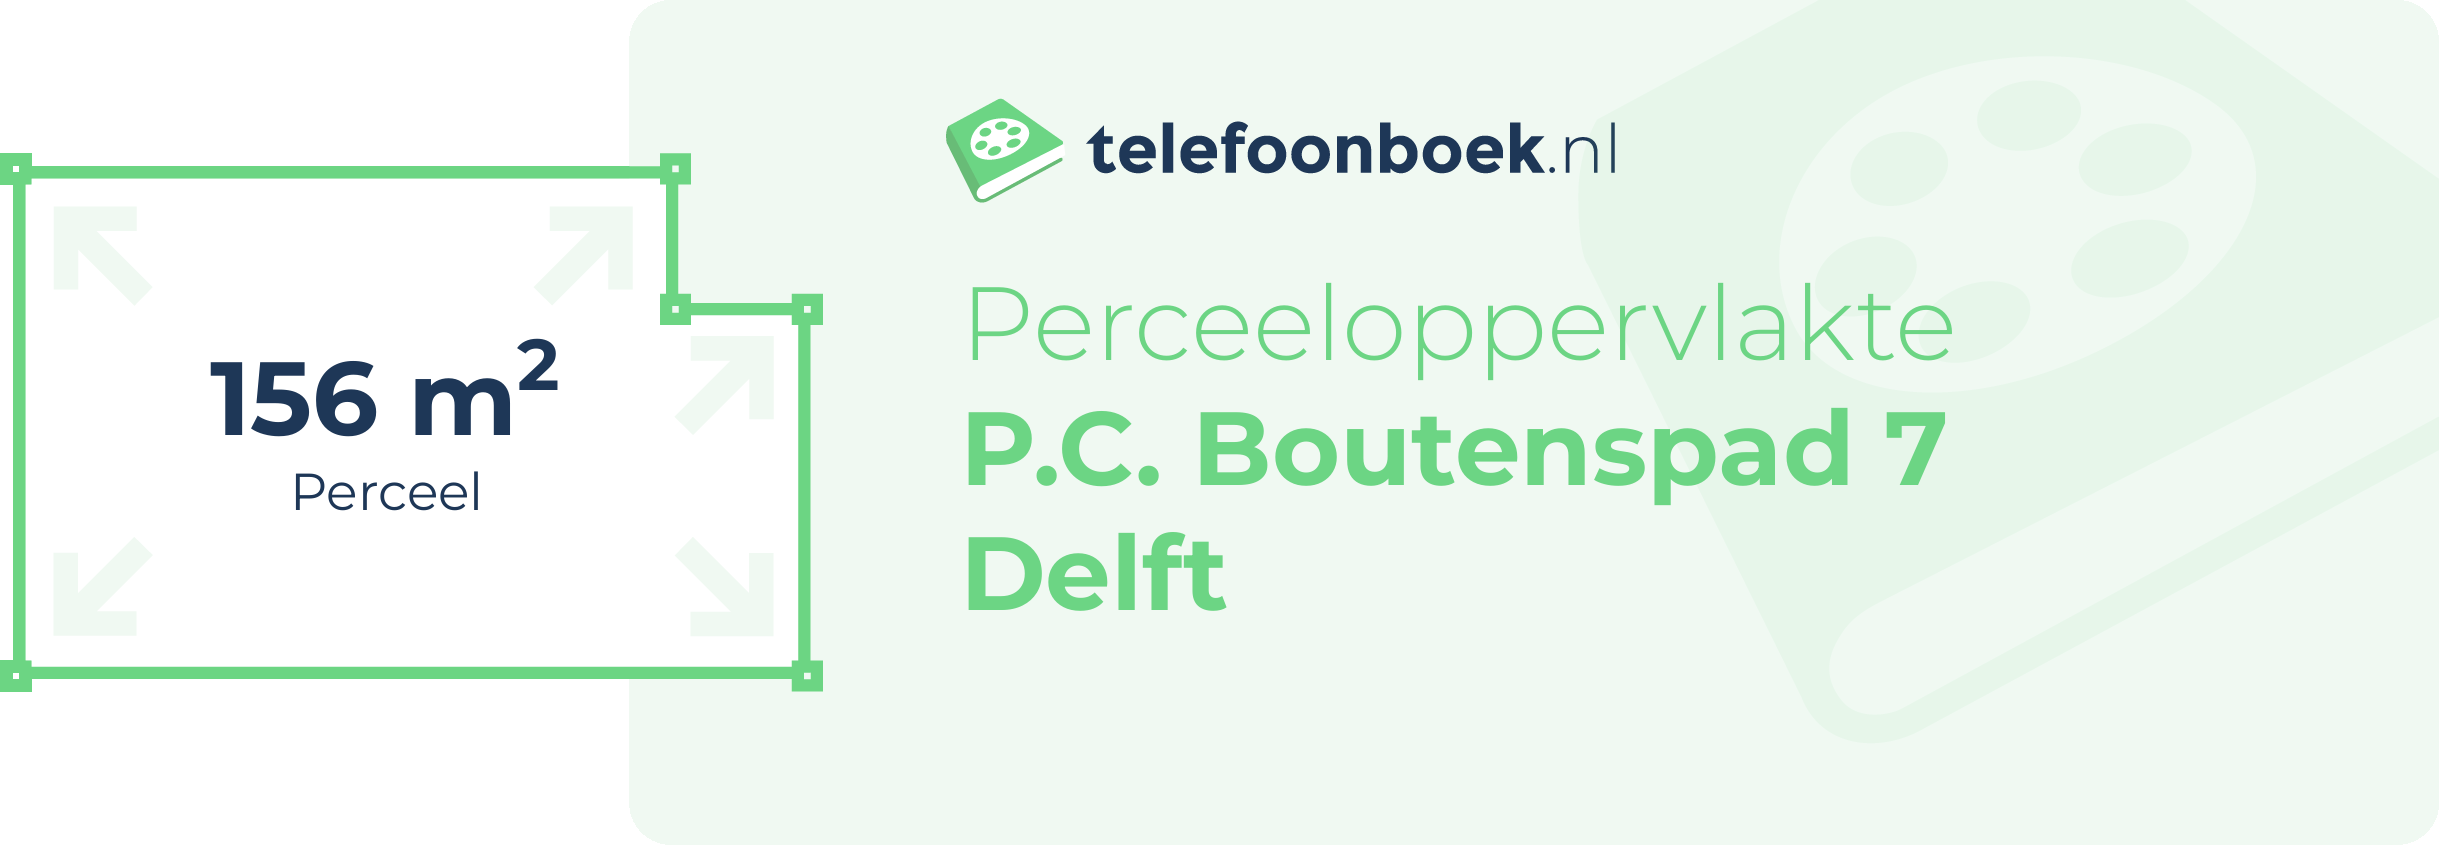 Perceeloppervlakte P.C. Boutenspad 7 Delft